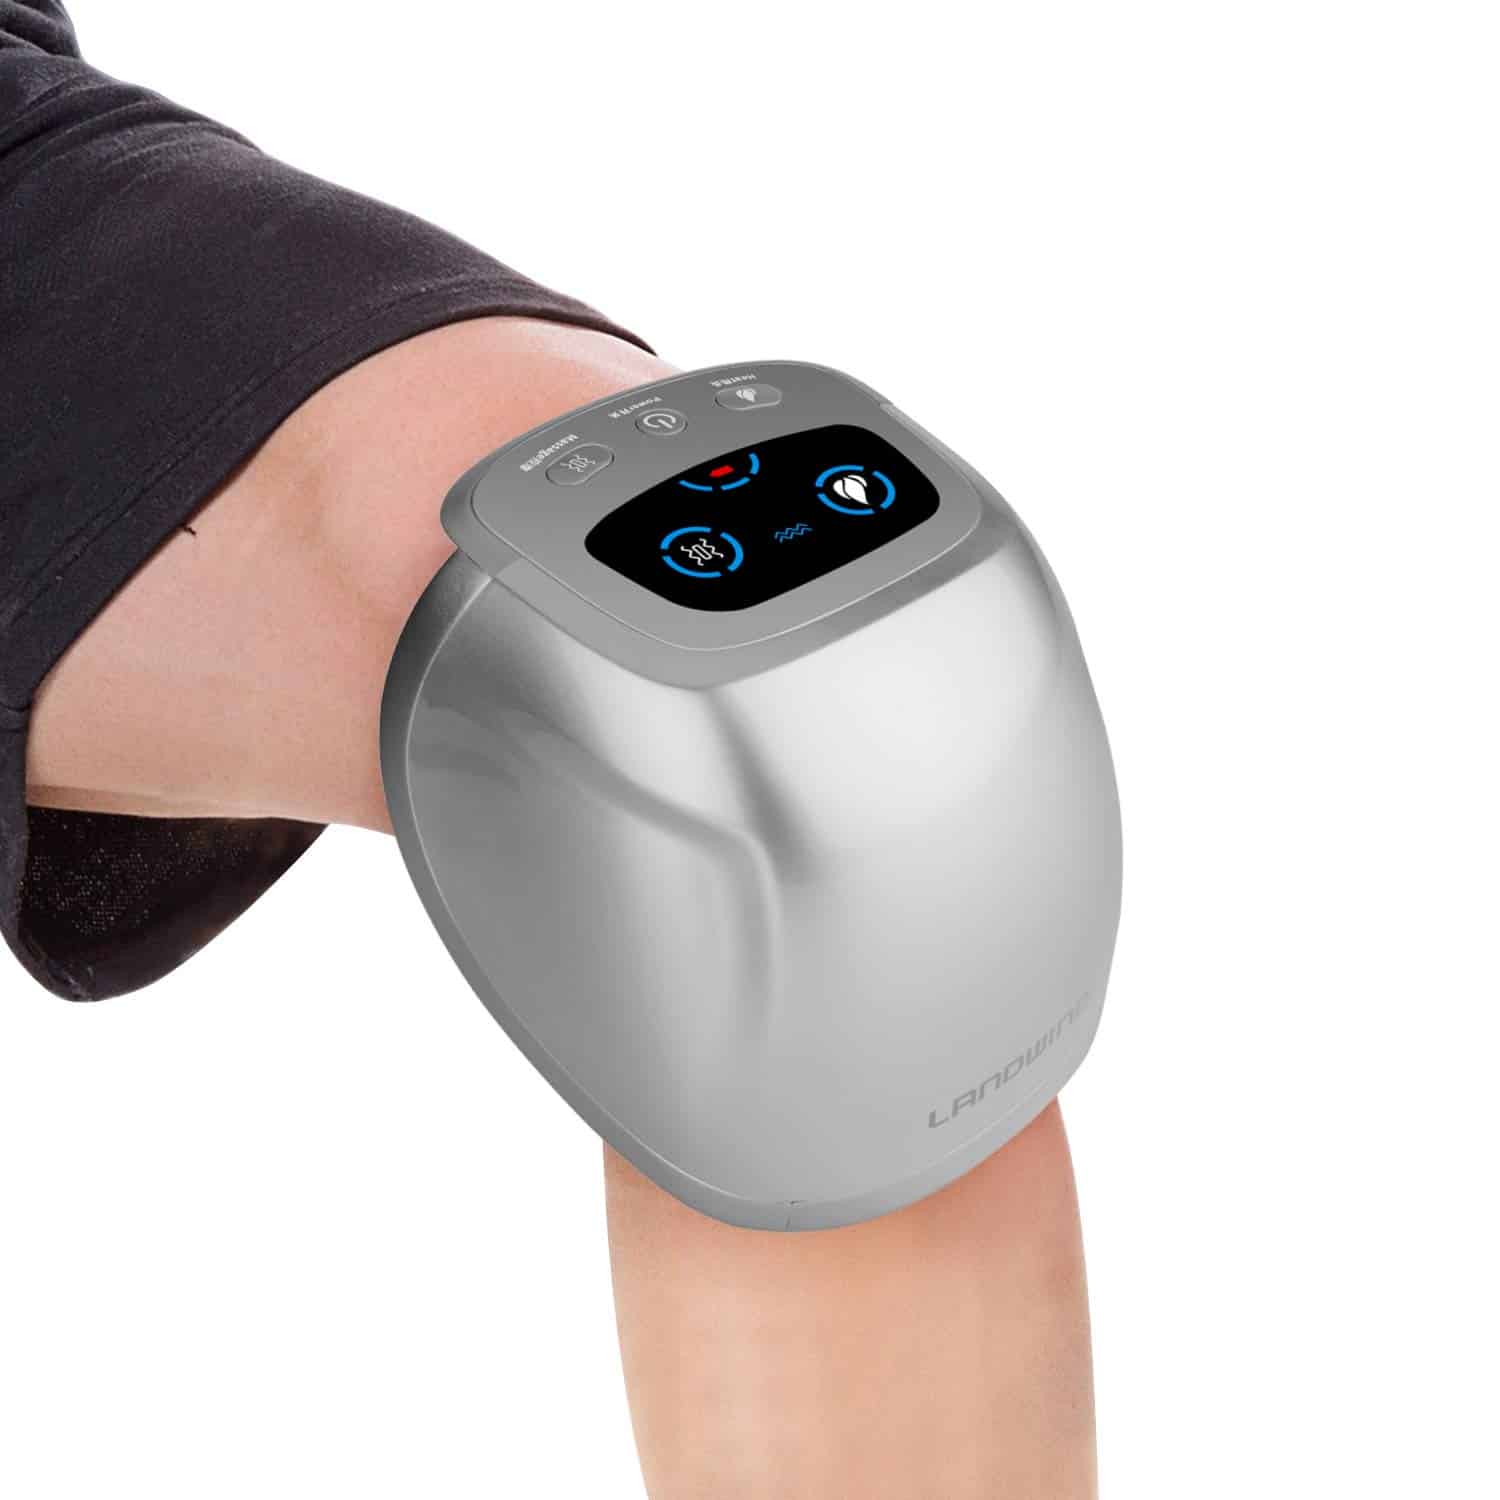 Laser Knee Warmer Leg Massager Machine Pain Relief For Arthritis